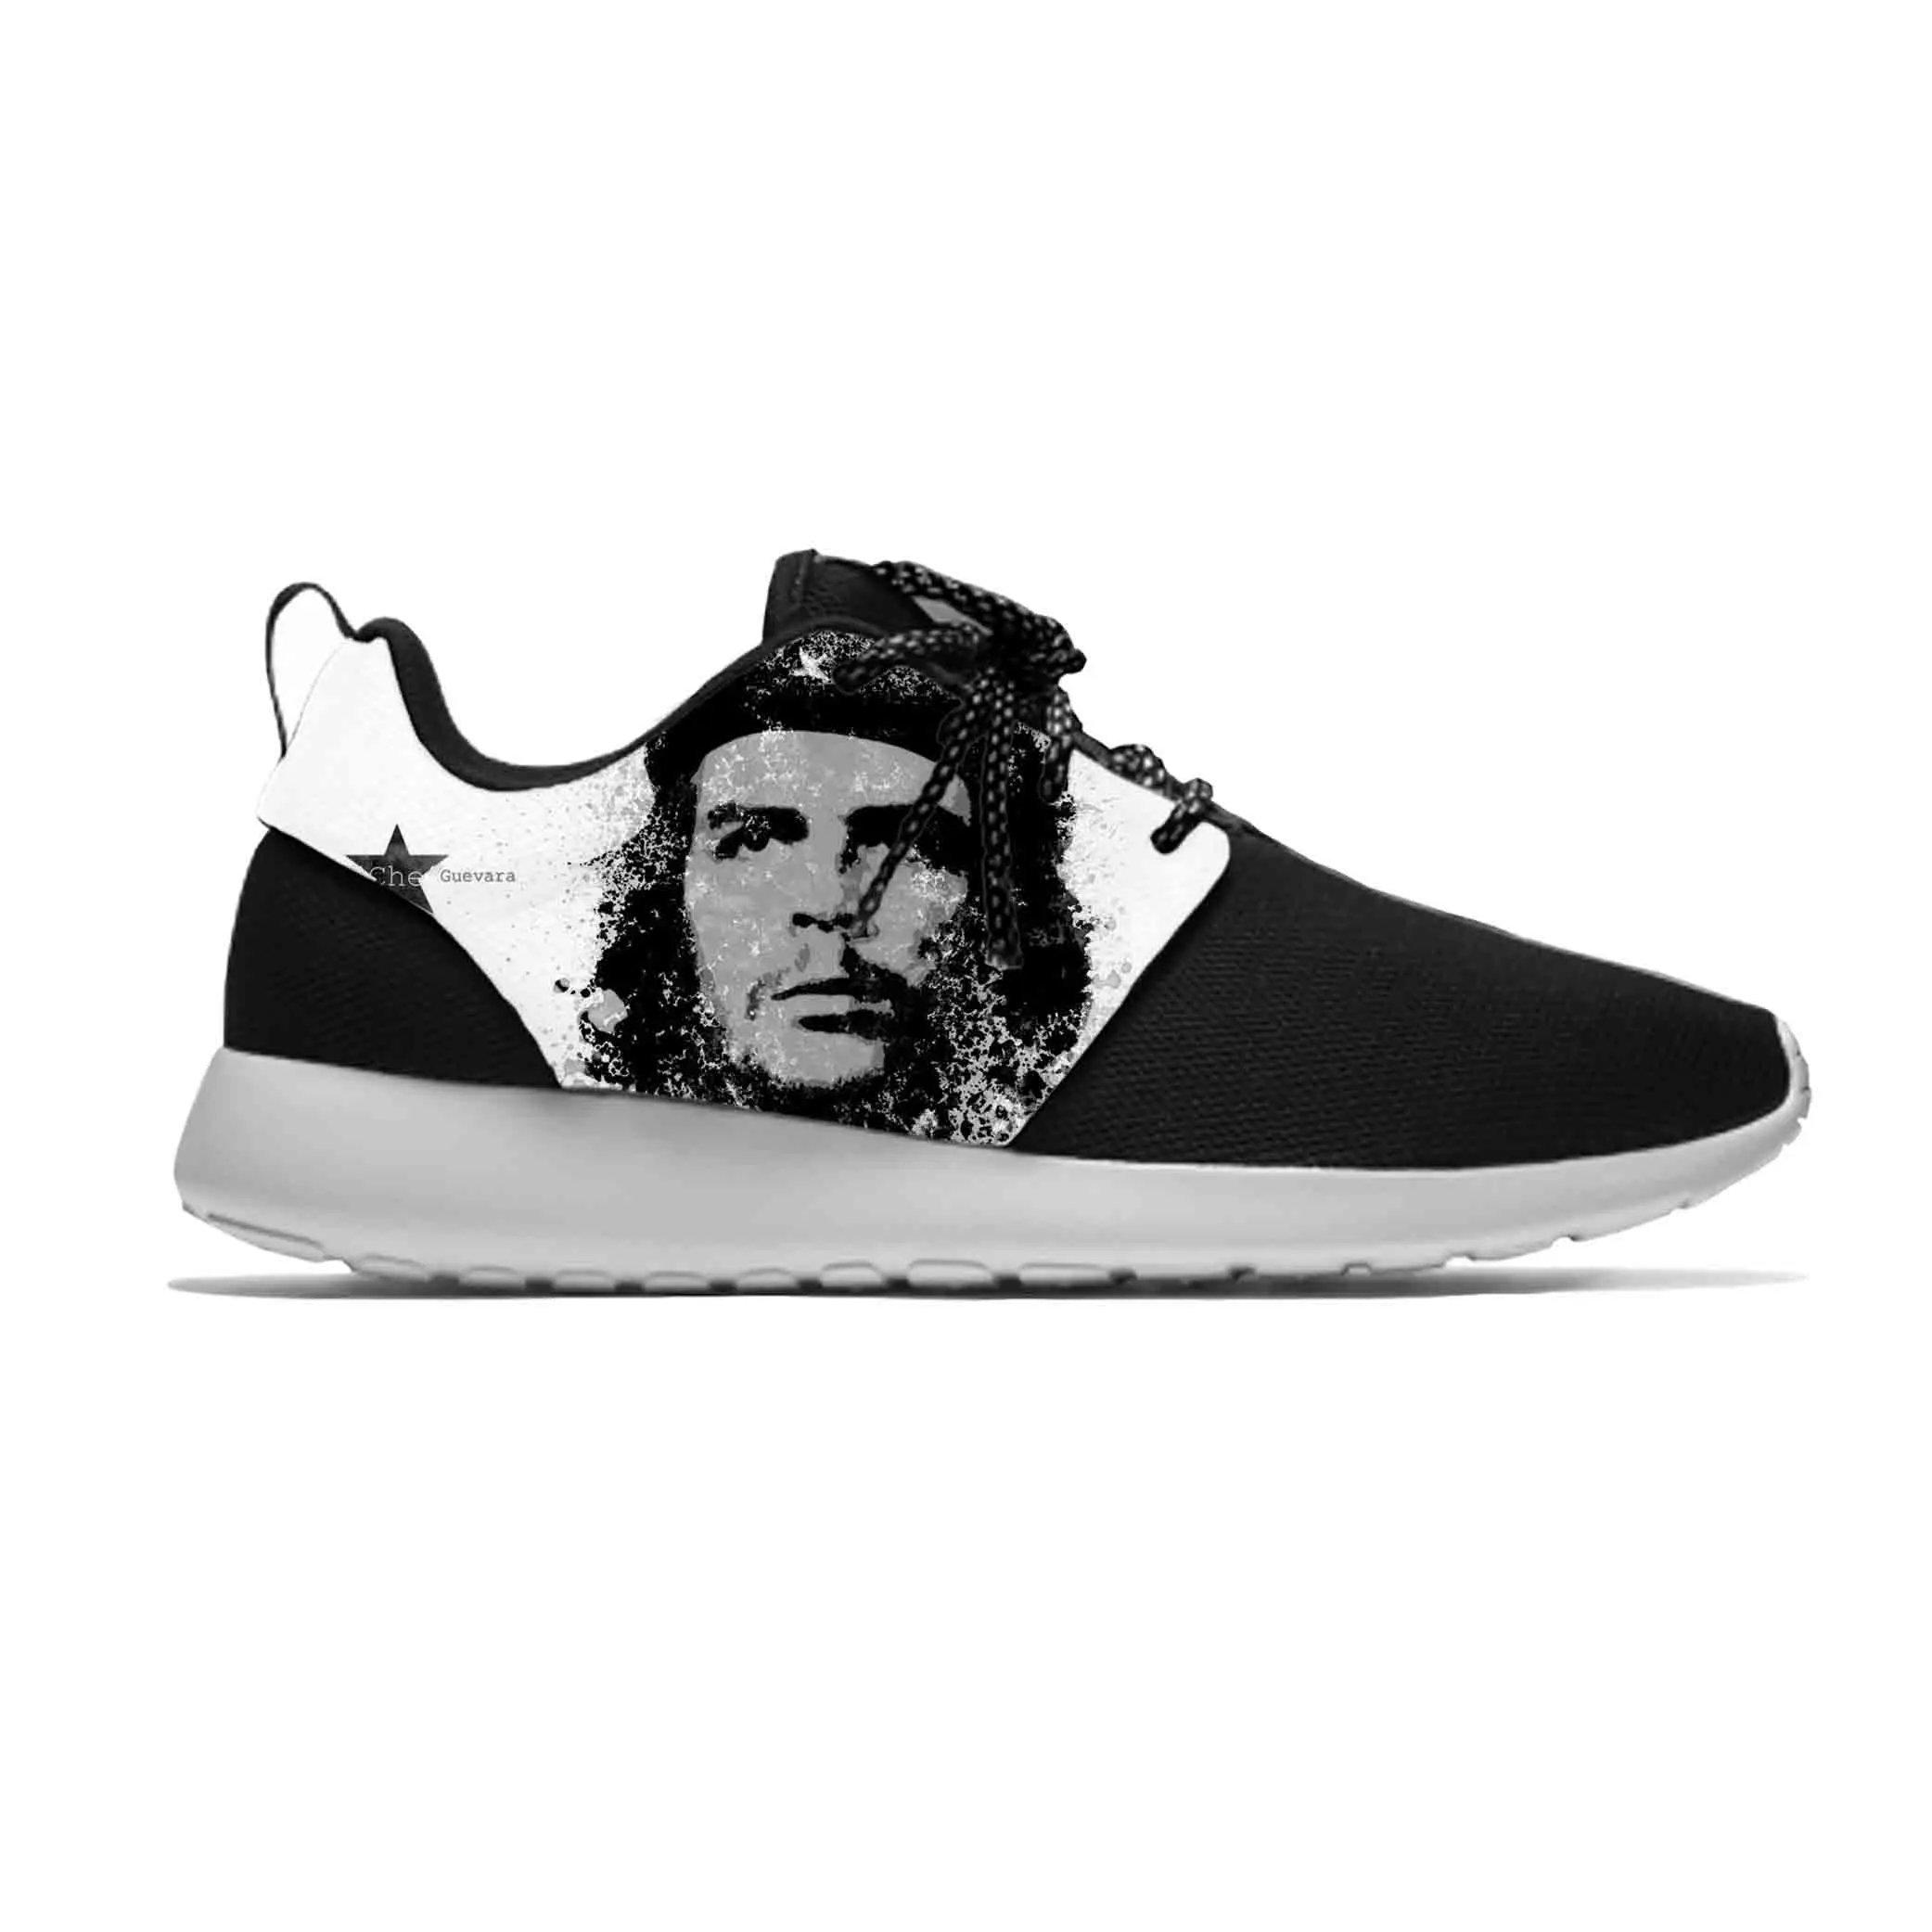 

Che Guevara Communism Socialism Cuba Cuban Funny Sport Running Shoes Casual Breathable Lightweight 3D Print Men Women Sneakers